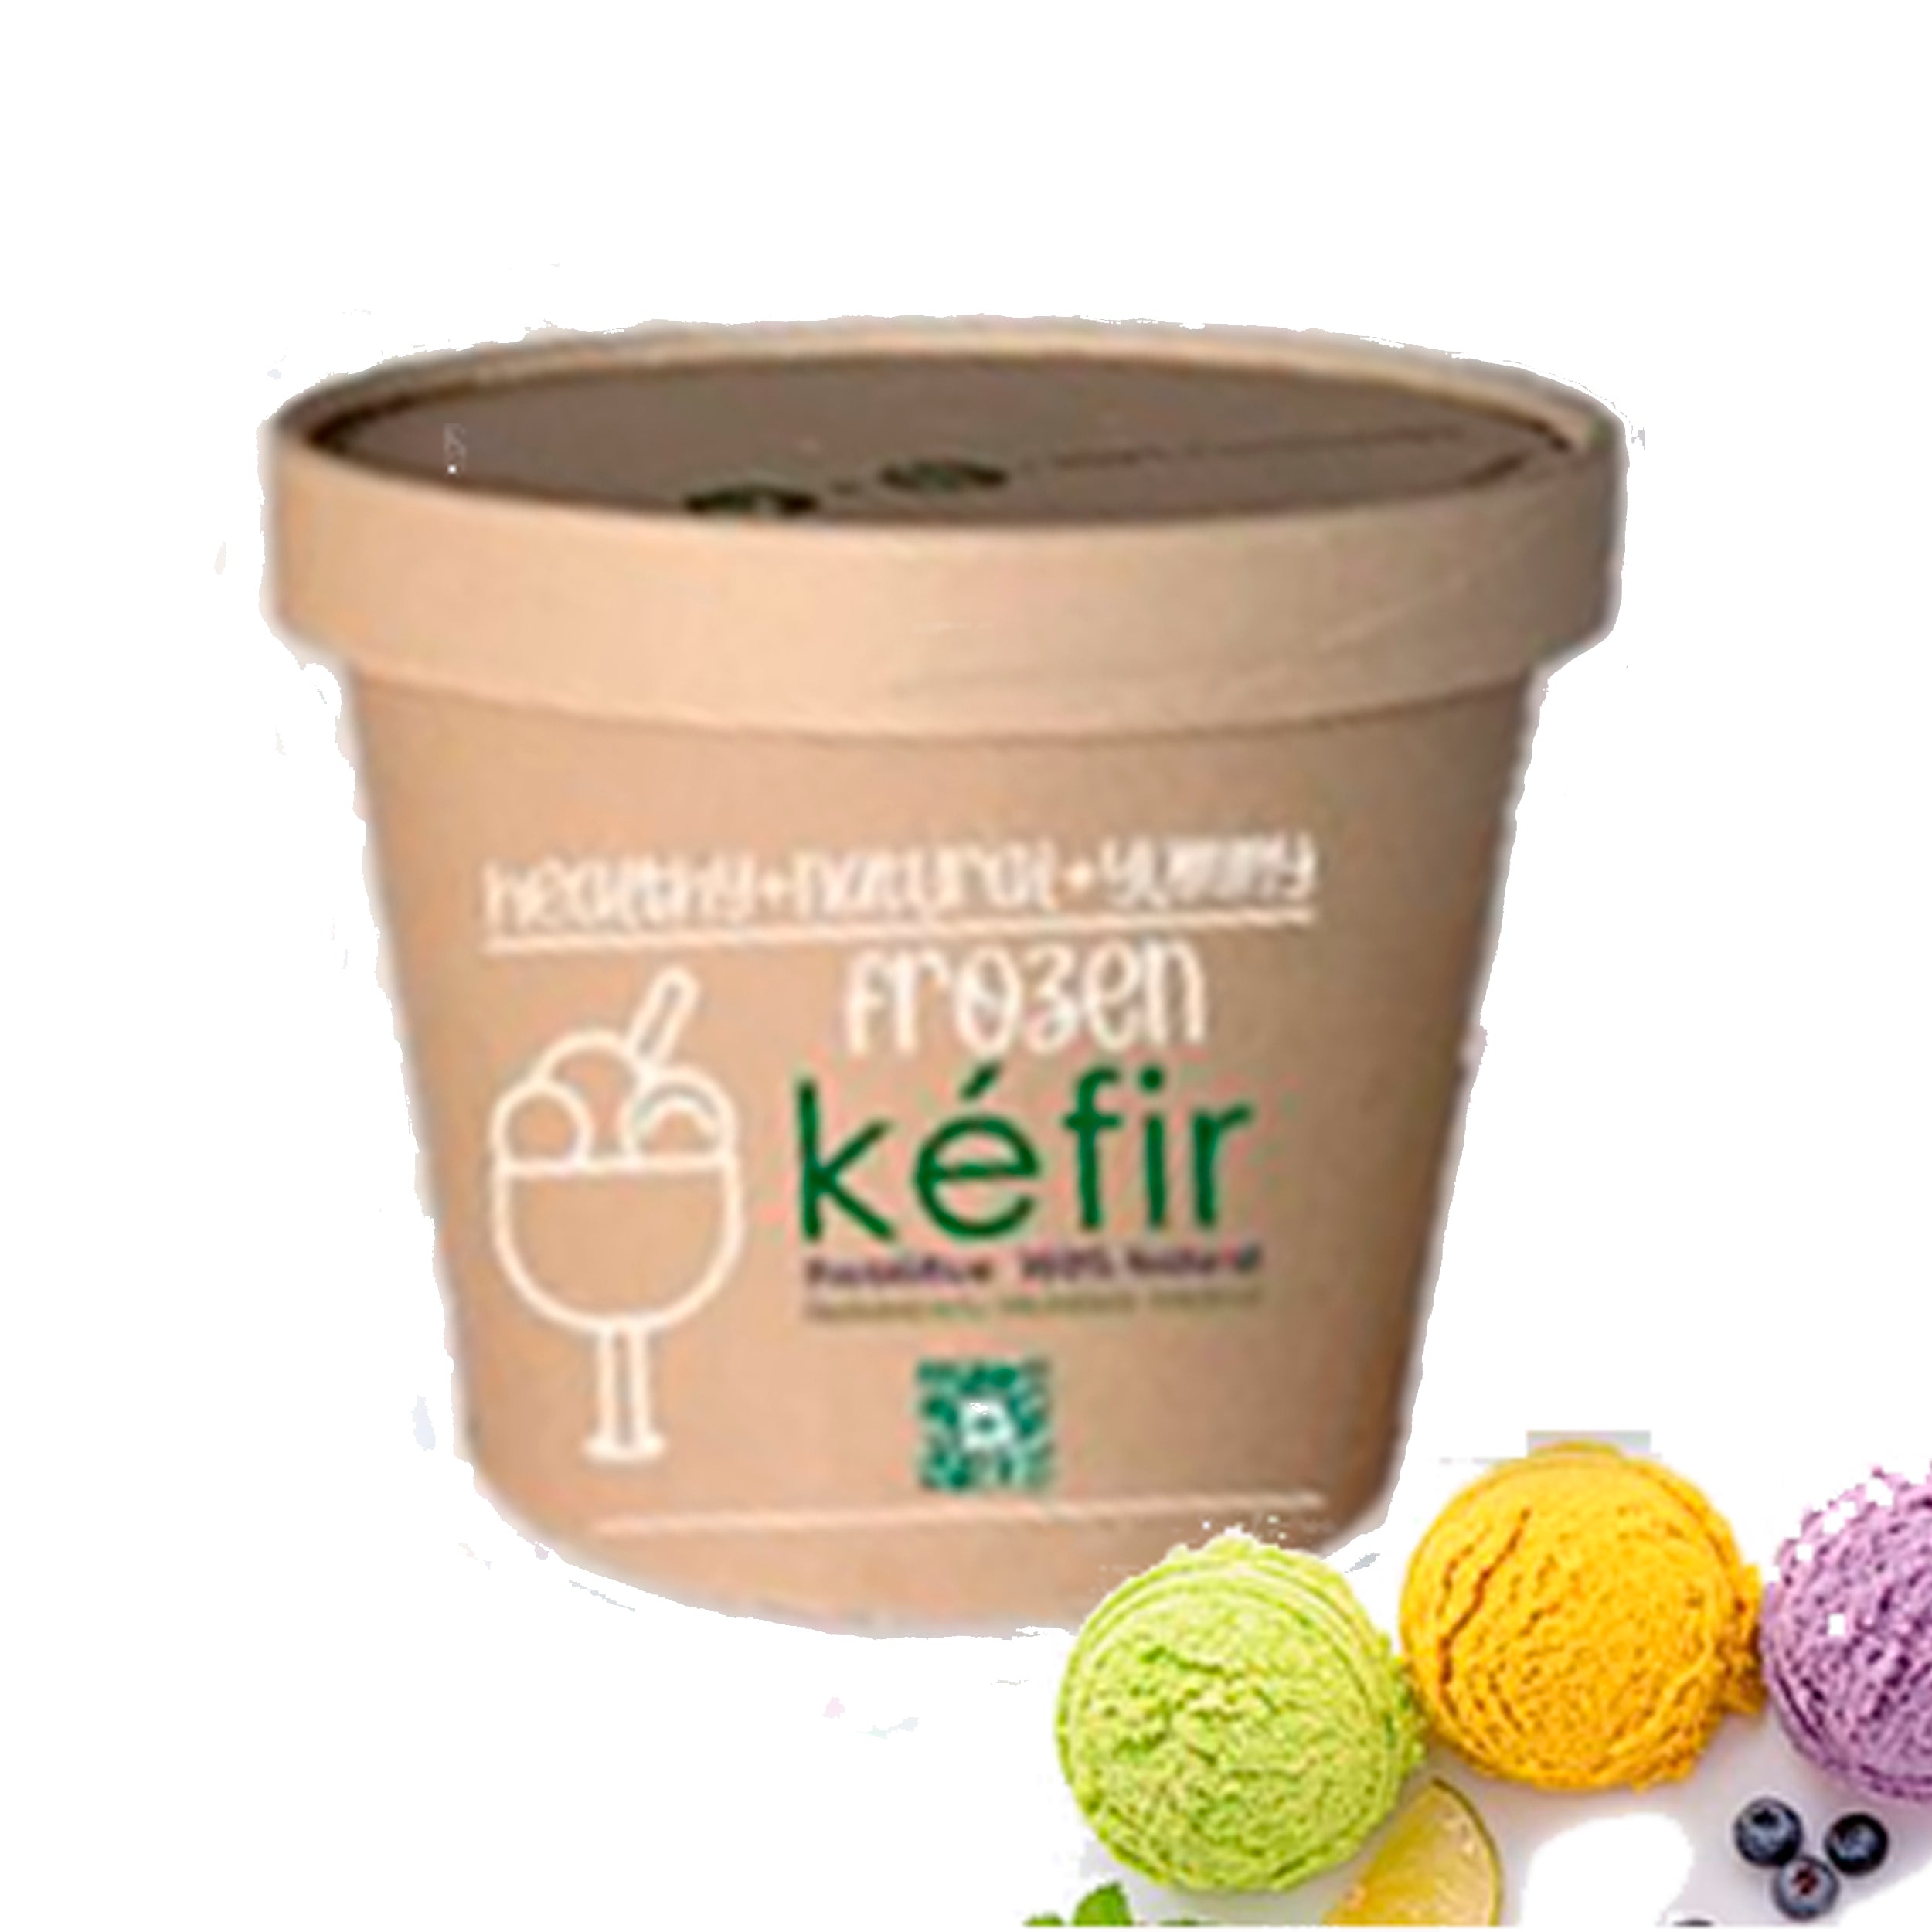 KEFIRGDL- Kefir frozen